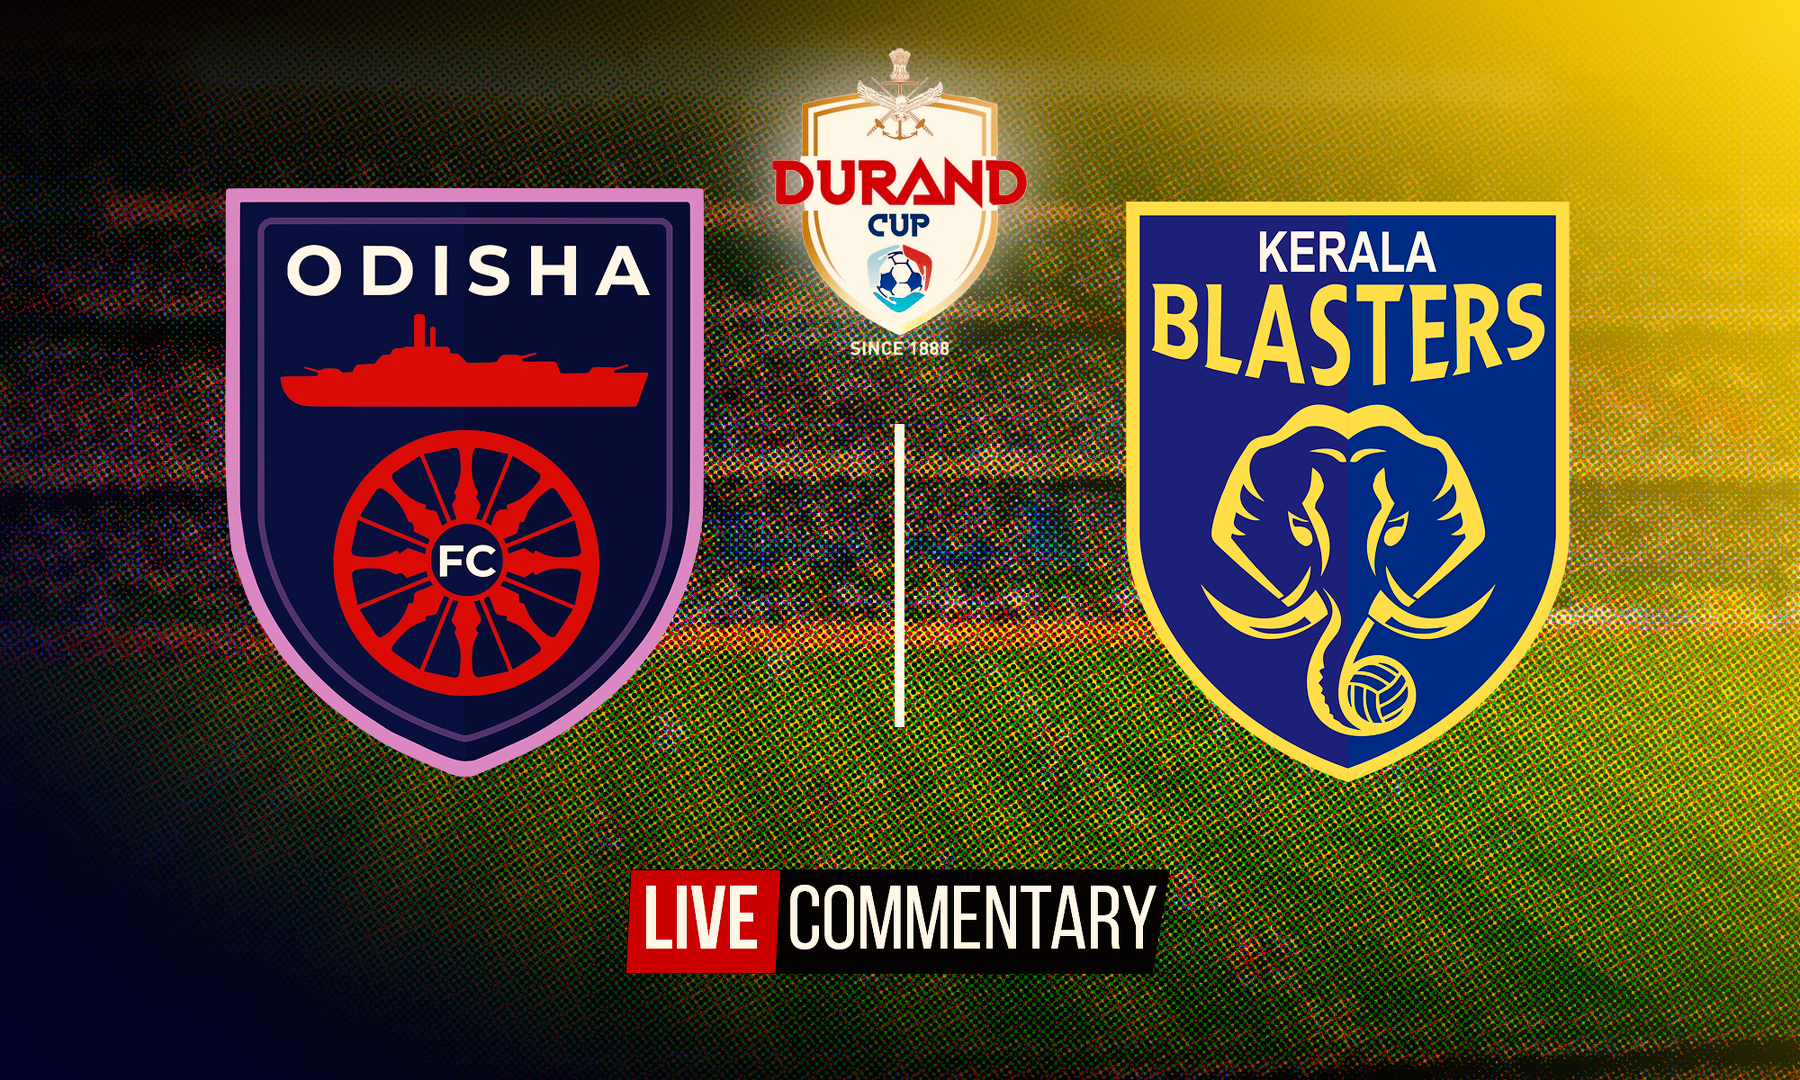 Durand Cup 2022: Odisha FC Vs Kerala Blasters Live